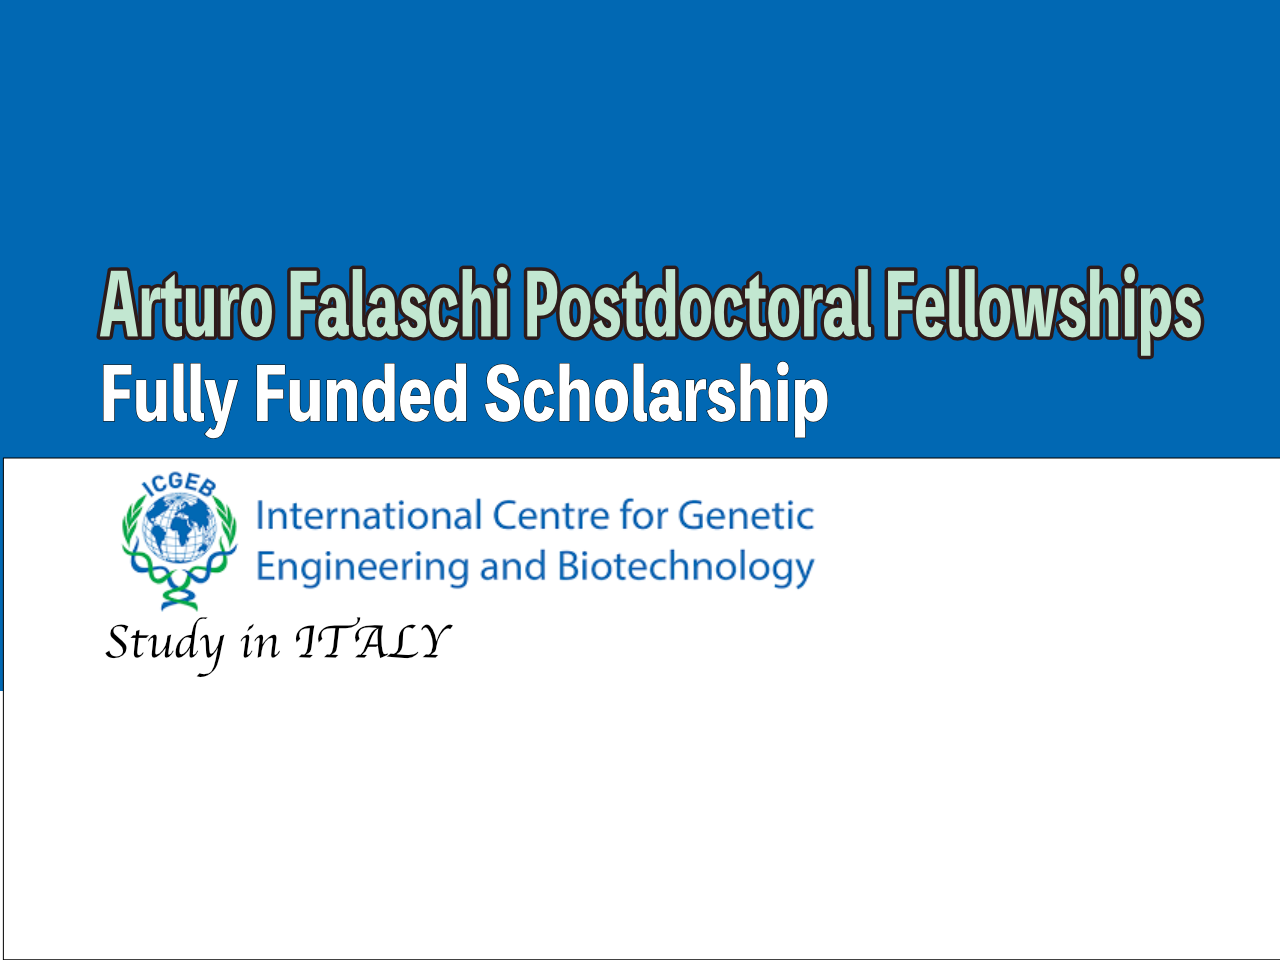 Arturo Falaschi Postdoctoral Fellowships